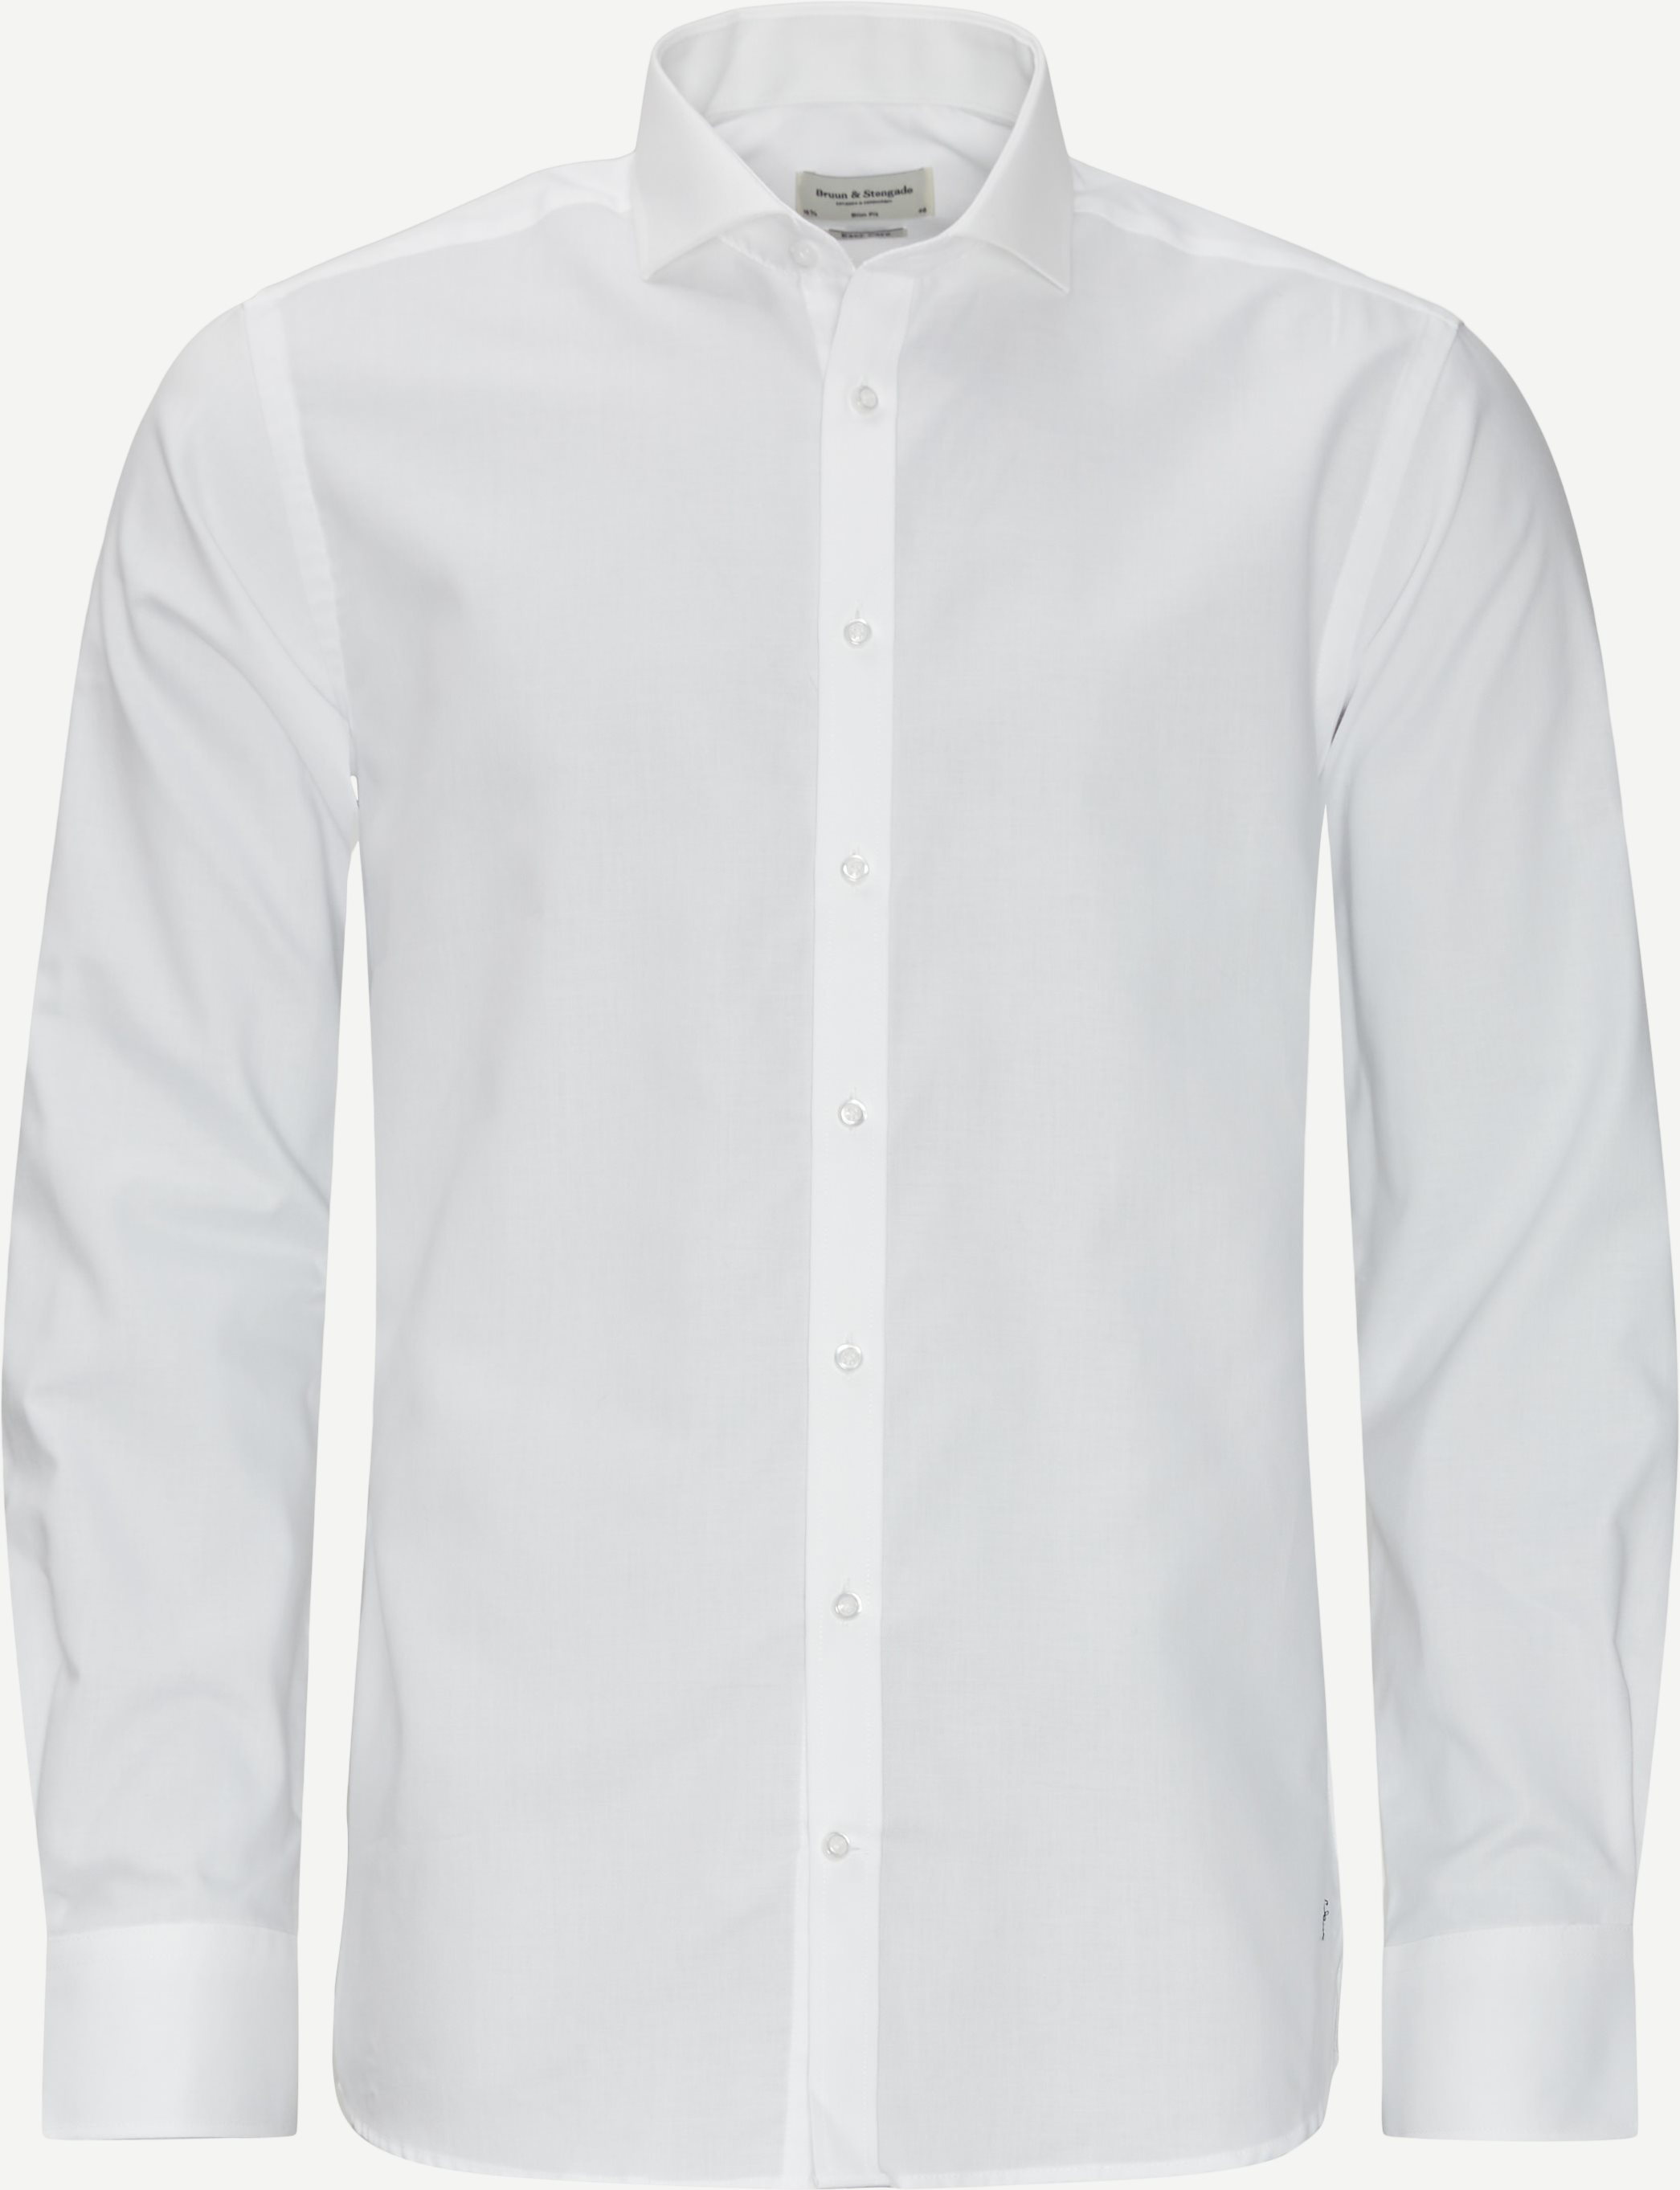 Leonardo Skjorte - Skjorter - Slim fit - Hvid